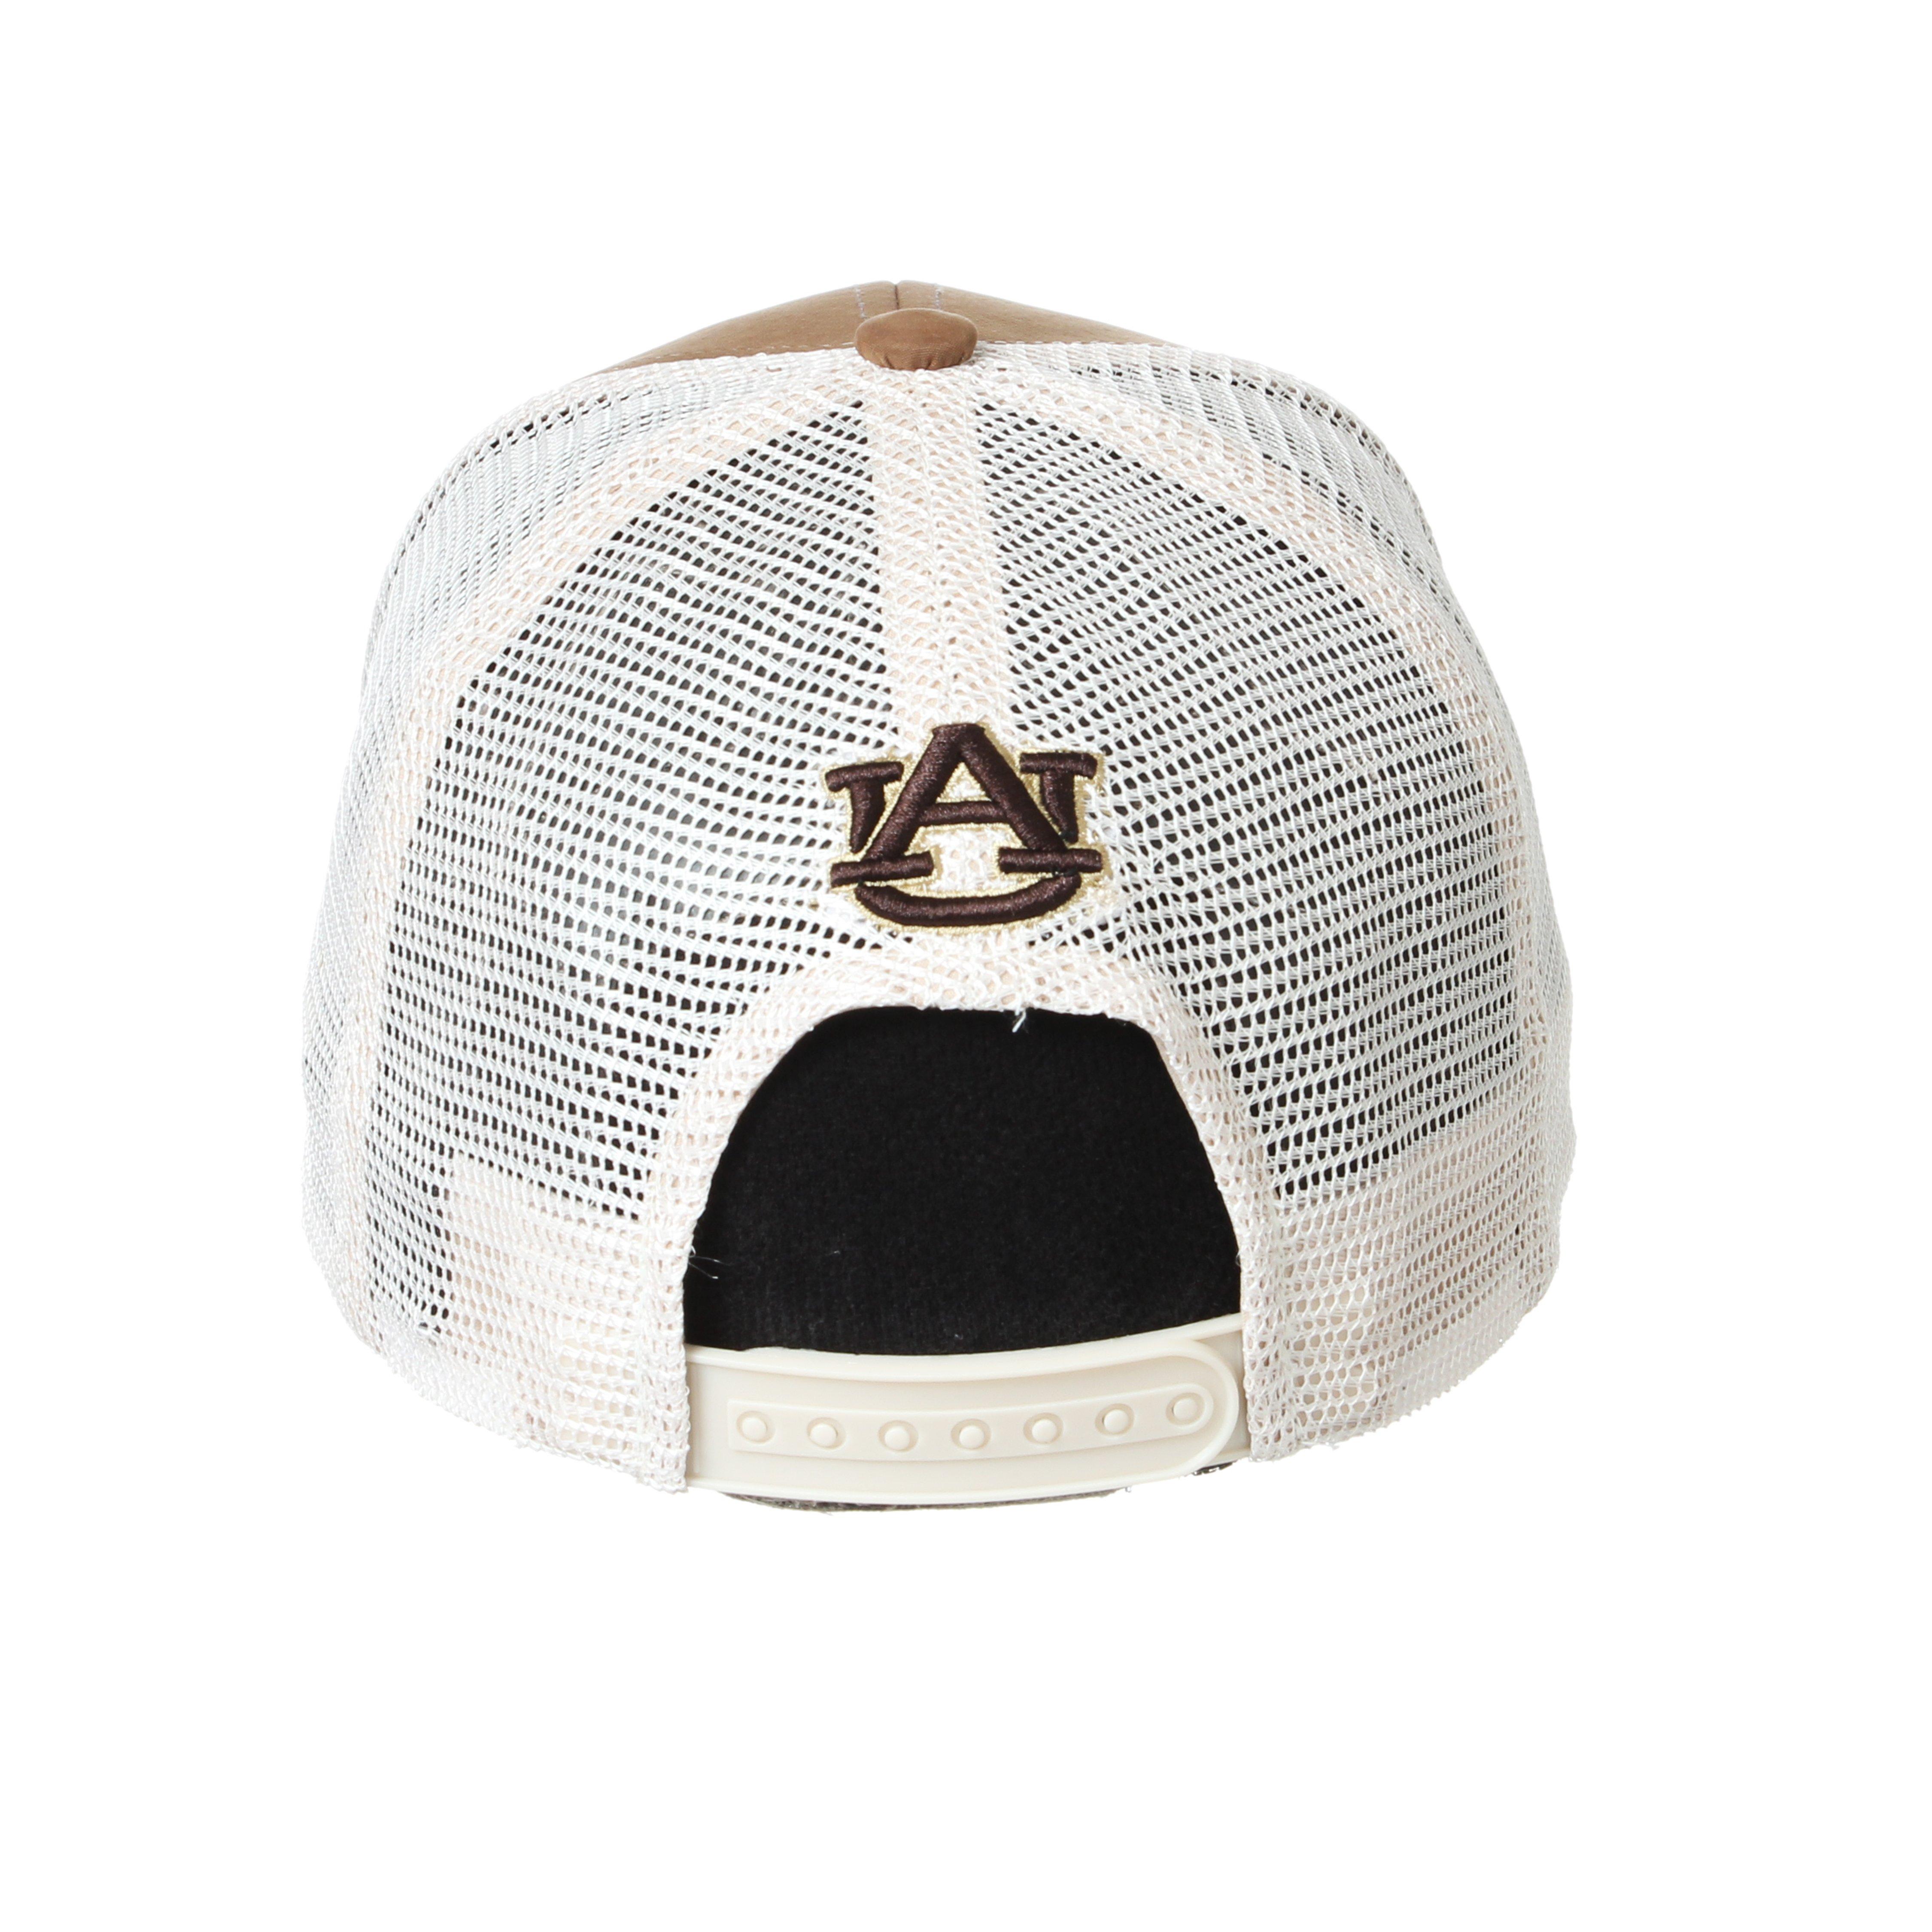 Zephyr NCAA Memorial Mesh Adjustable Snapback Hat